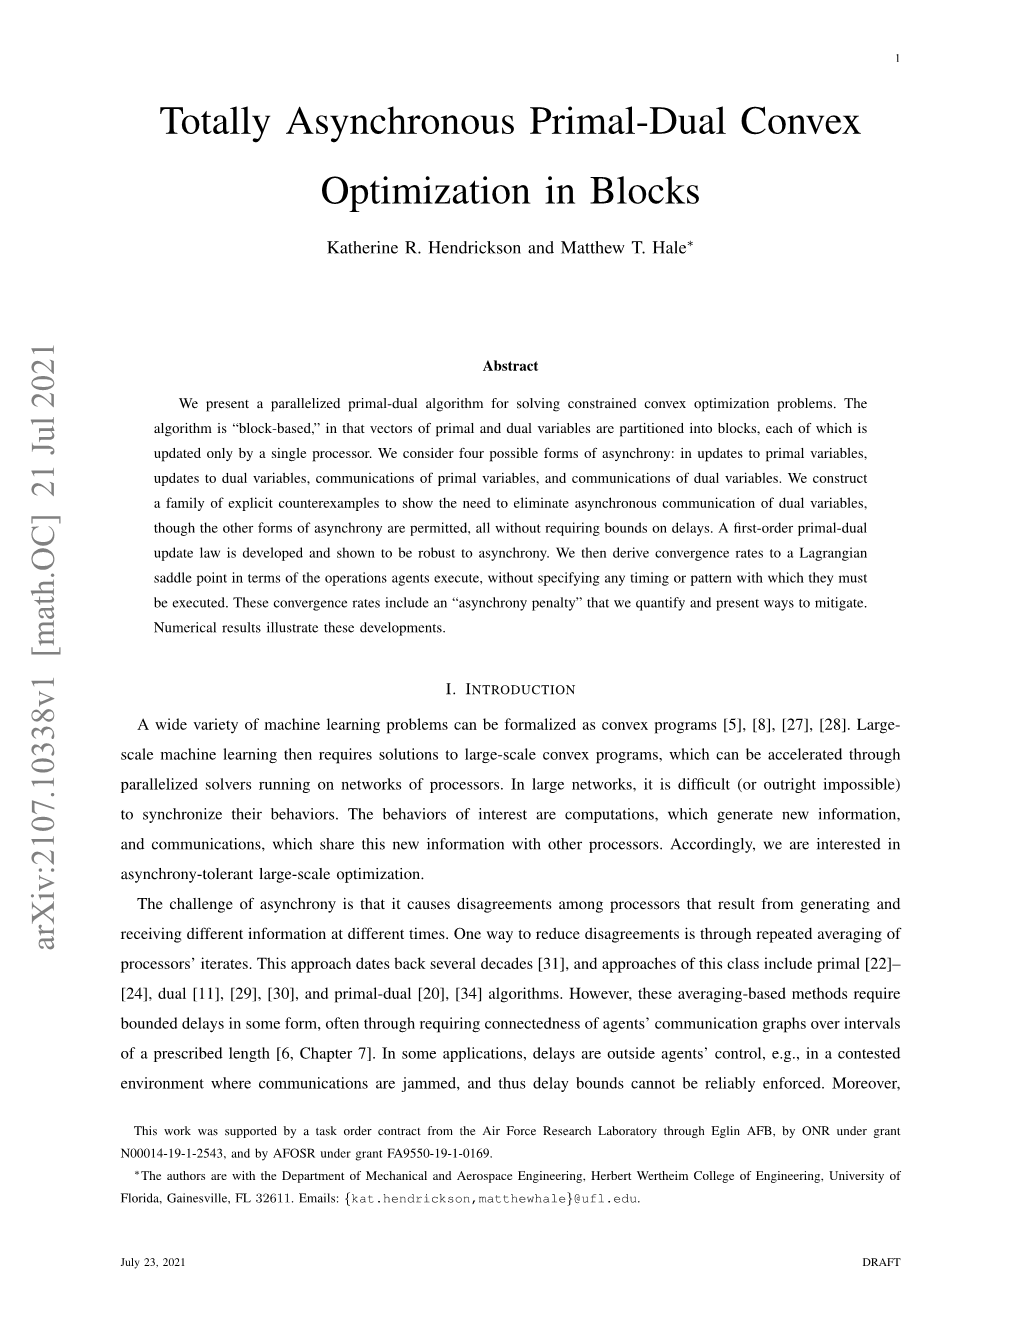 Totally Asynchronous Primal-Dual Convex Optimization in Blocks